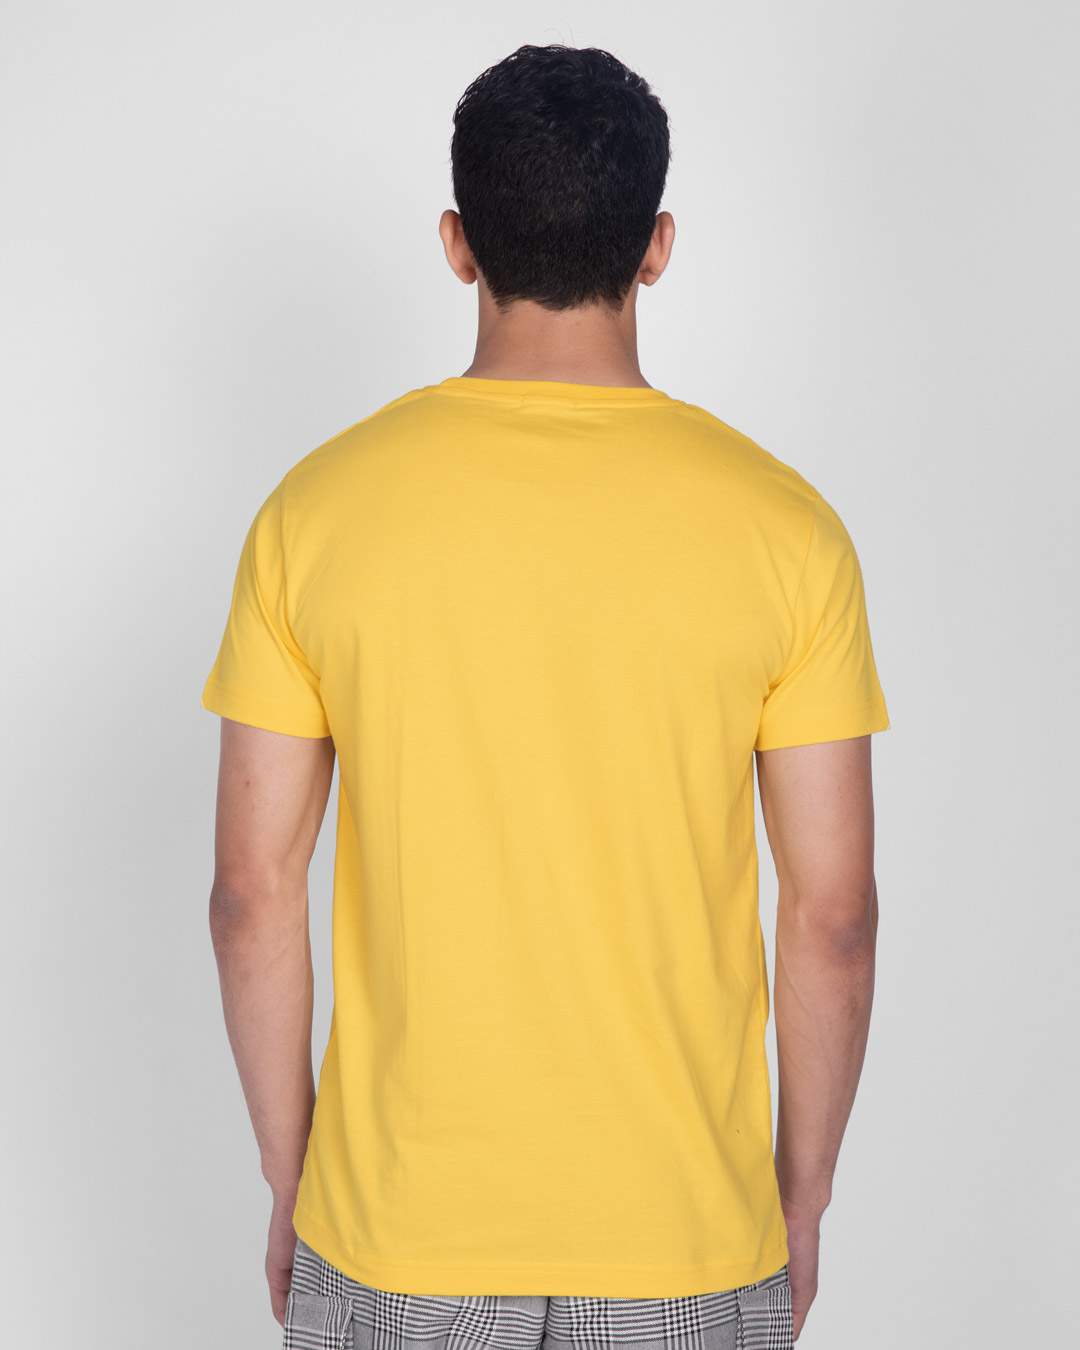 Shop Men Will Be.. Half Sleeve T-Shirt Happy Yellow-Back